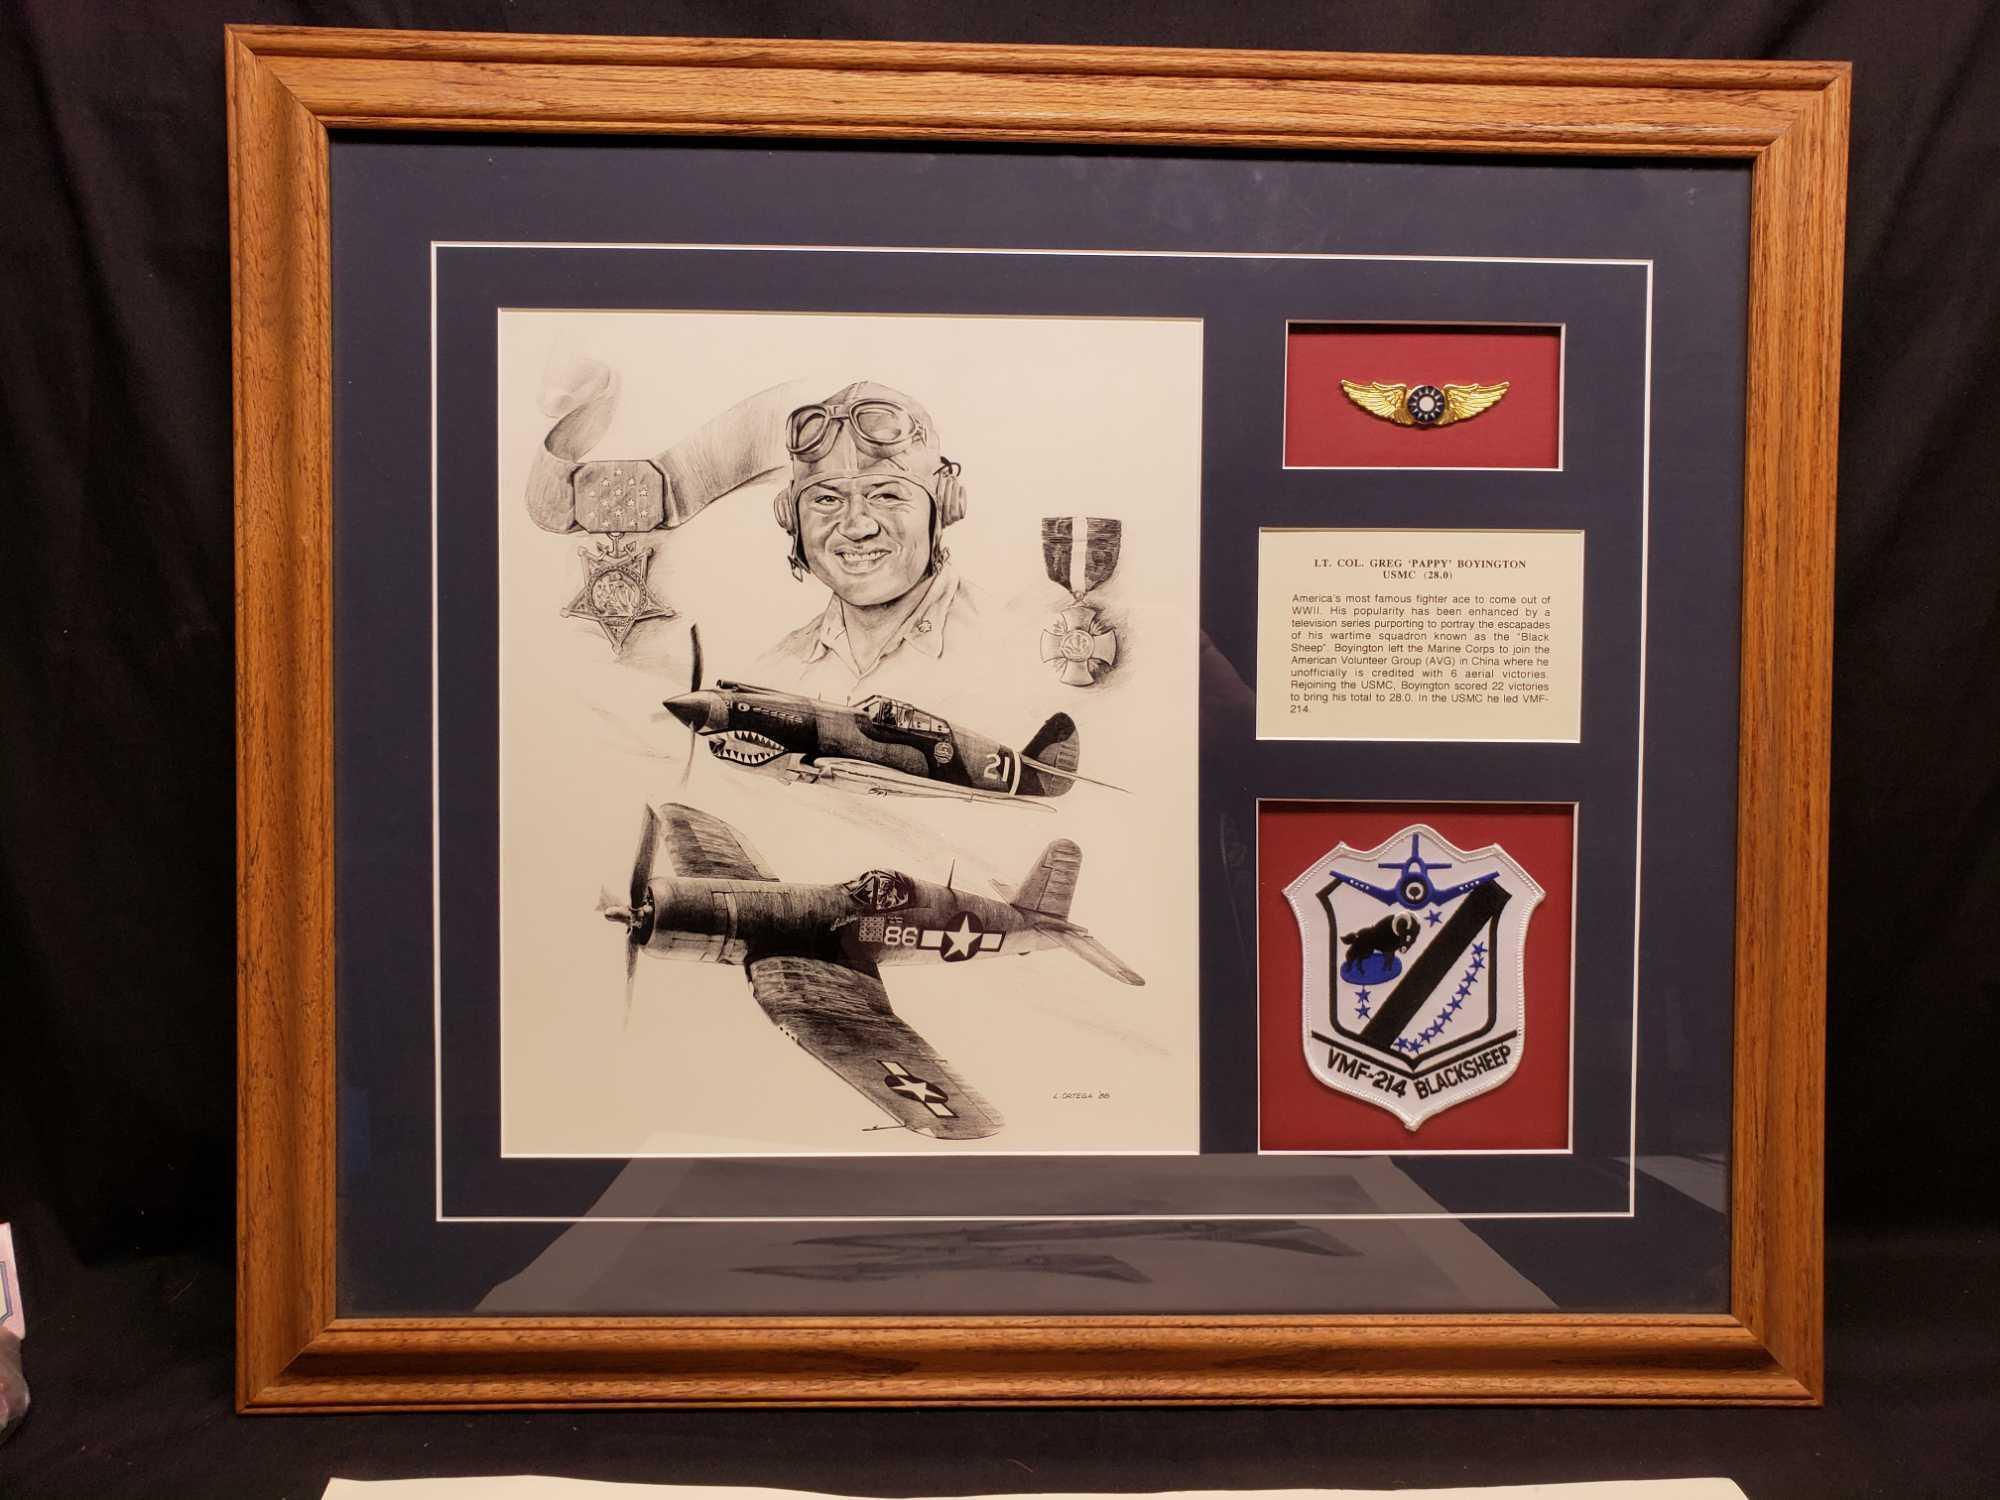 Beautiful Framed Tribute to Lt. Col. Greg 'Pappy' Boyinton USMC